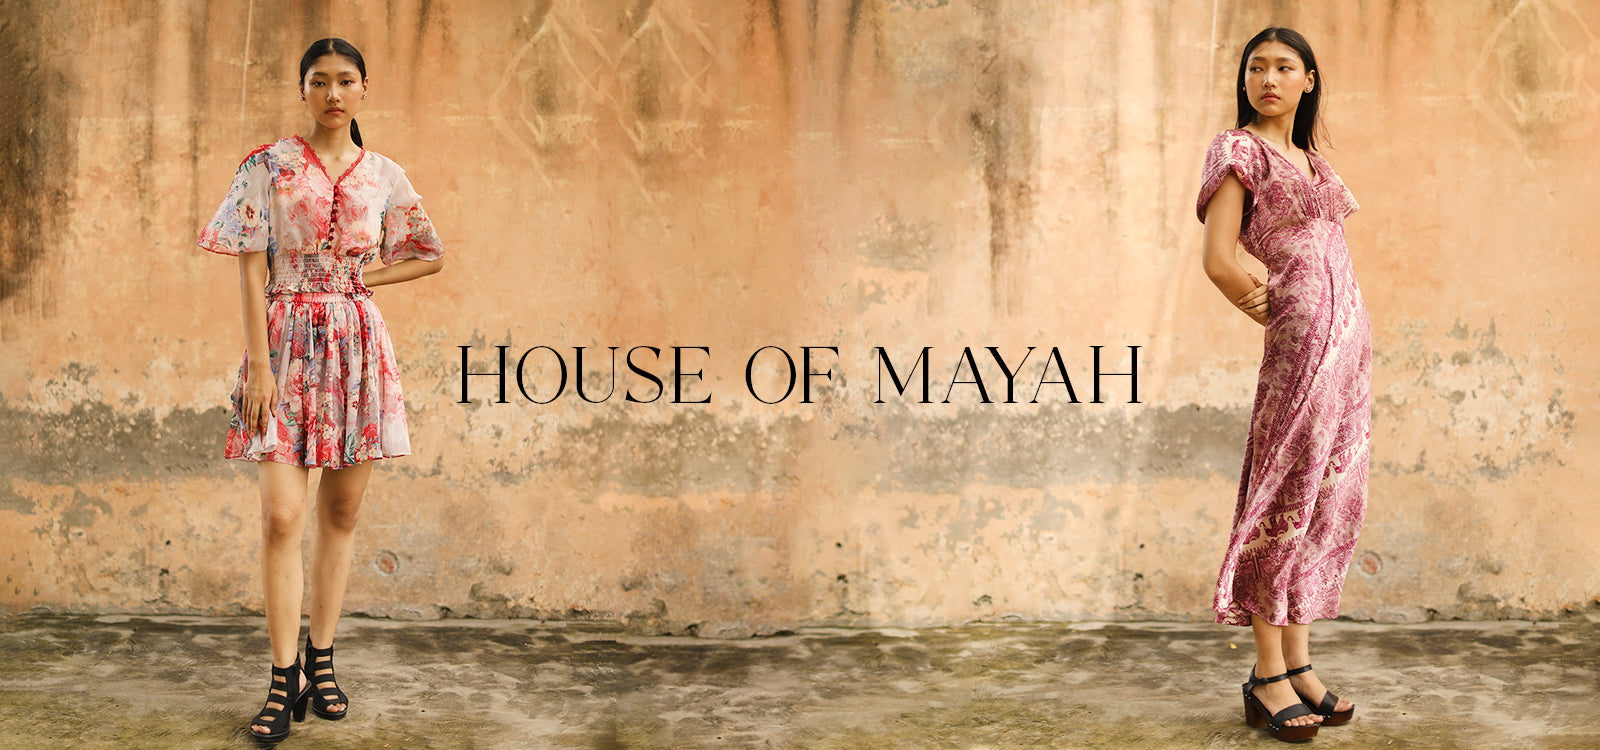 HOUSE OF MAYAH